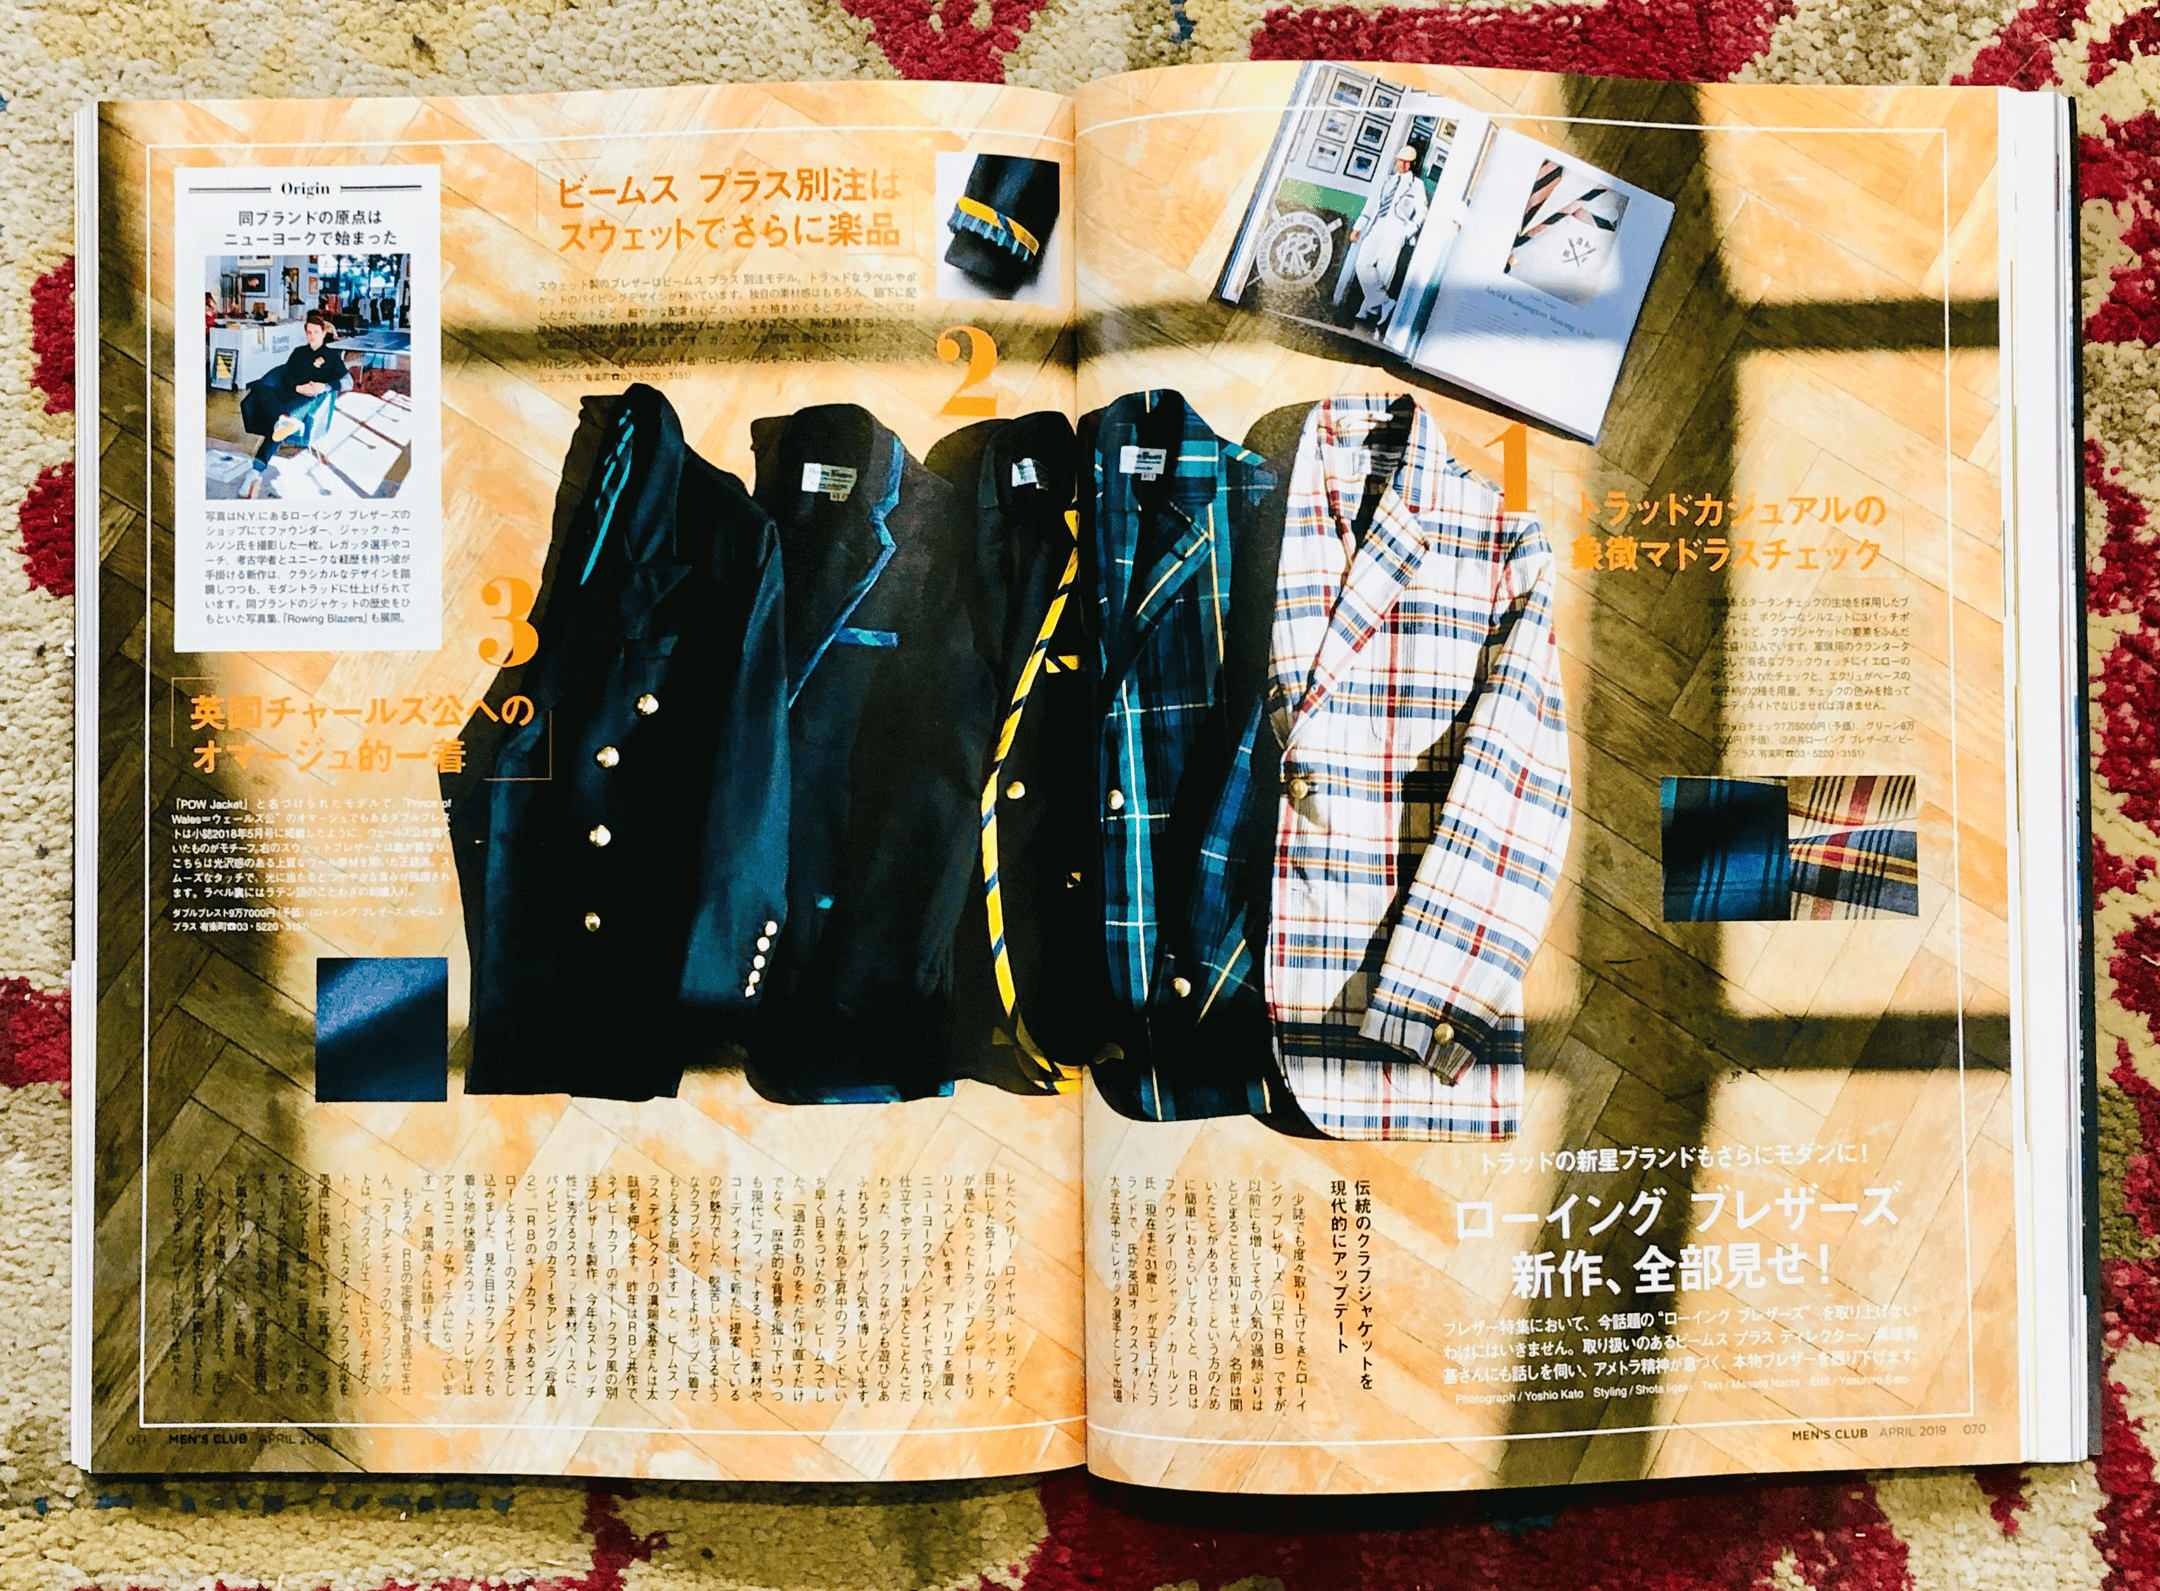 Men's Club (Rowing Blazers featured in Japanese menswear magazine, Men's Club)